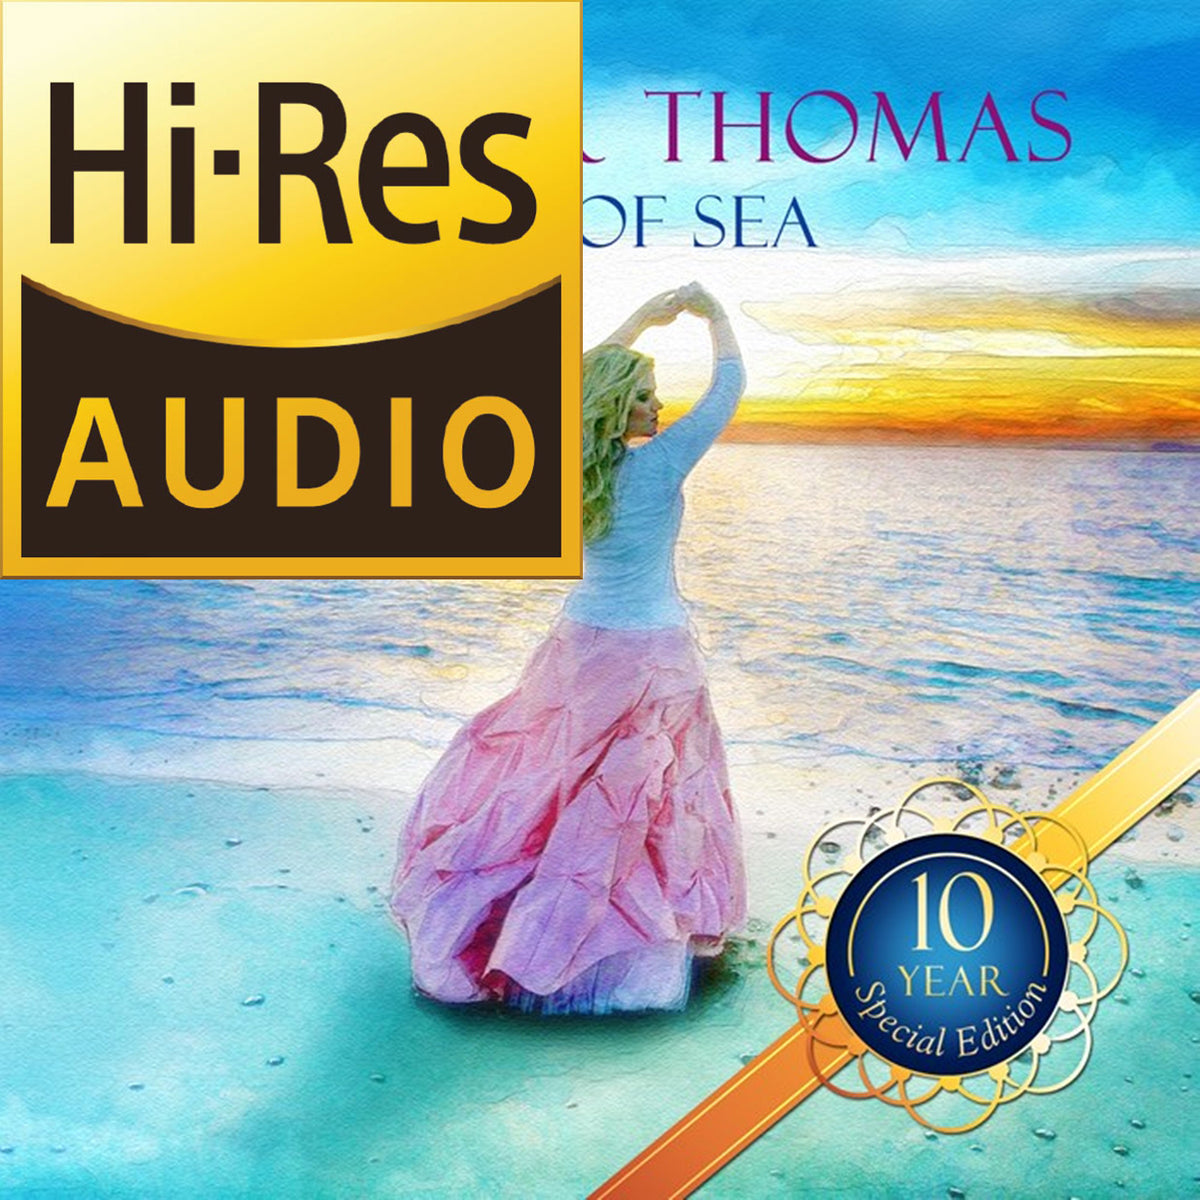 Key of Sea (10 Year Special Edition) Digital Album Download High Res 24/44 (2017)